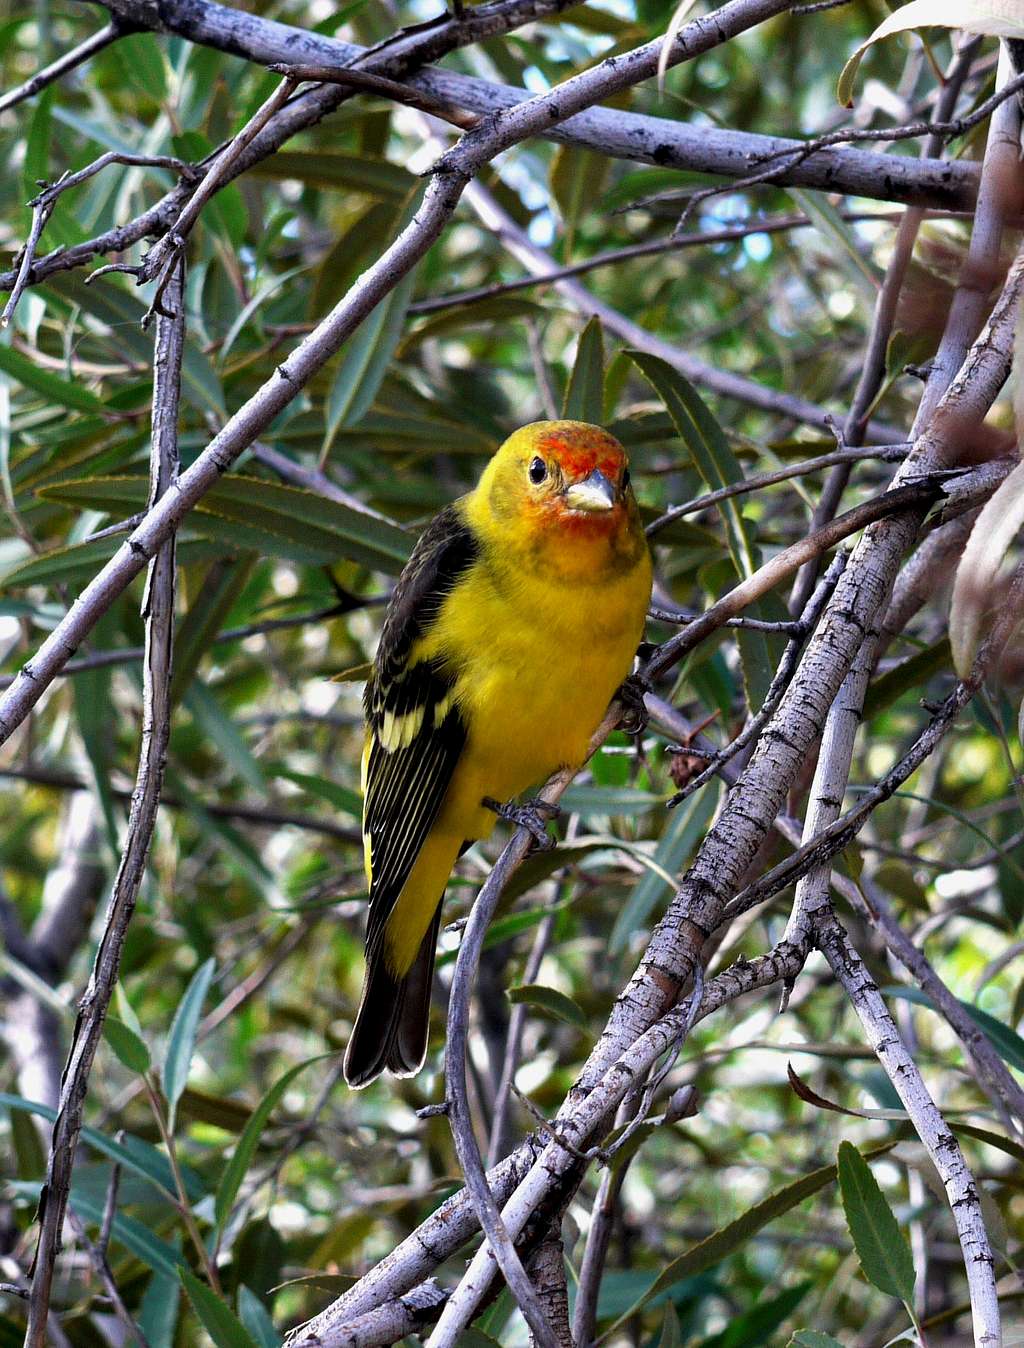 A yellow Bird